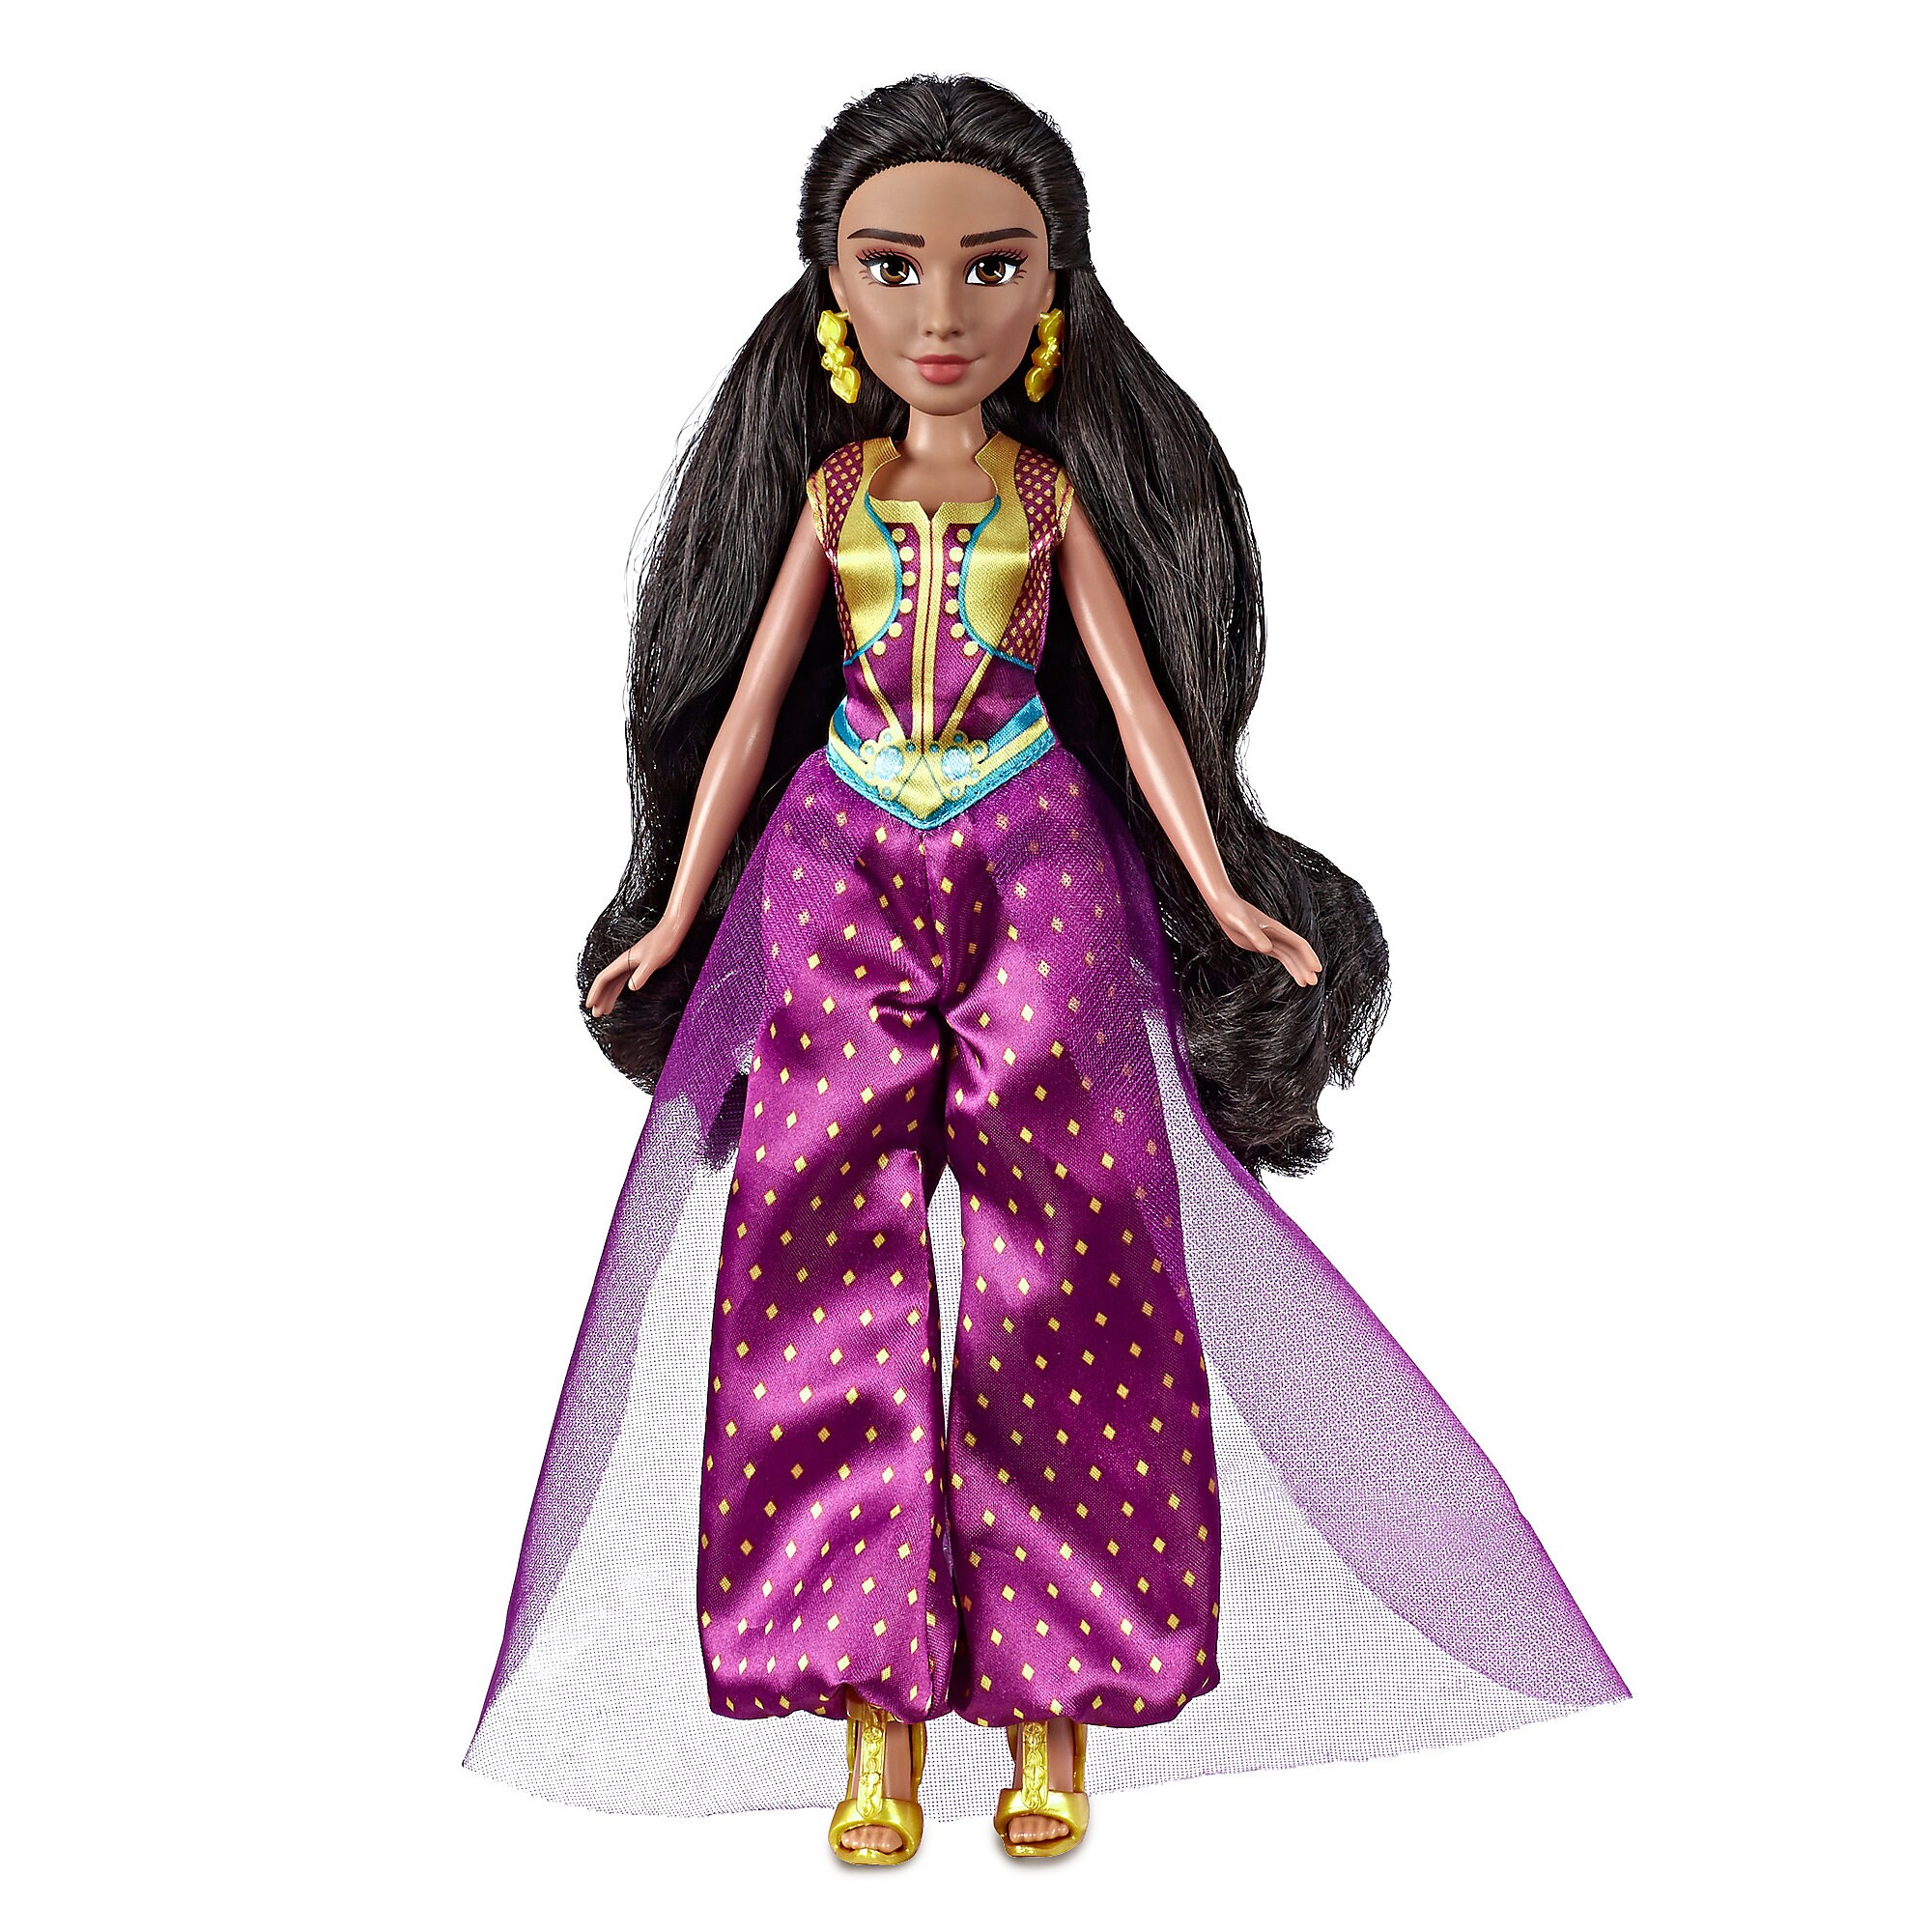 Jasmine Fashion Doll - Aladdin - Live-Action Film